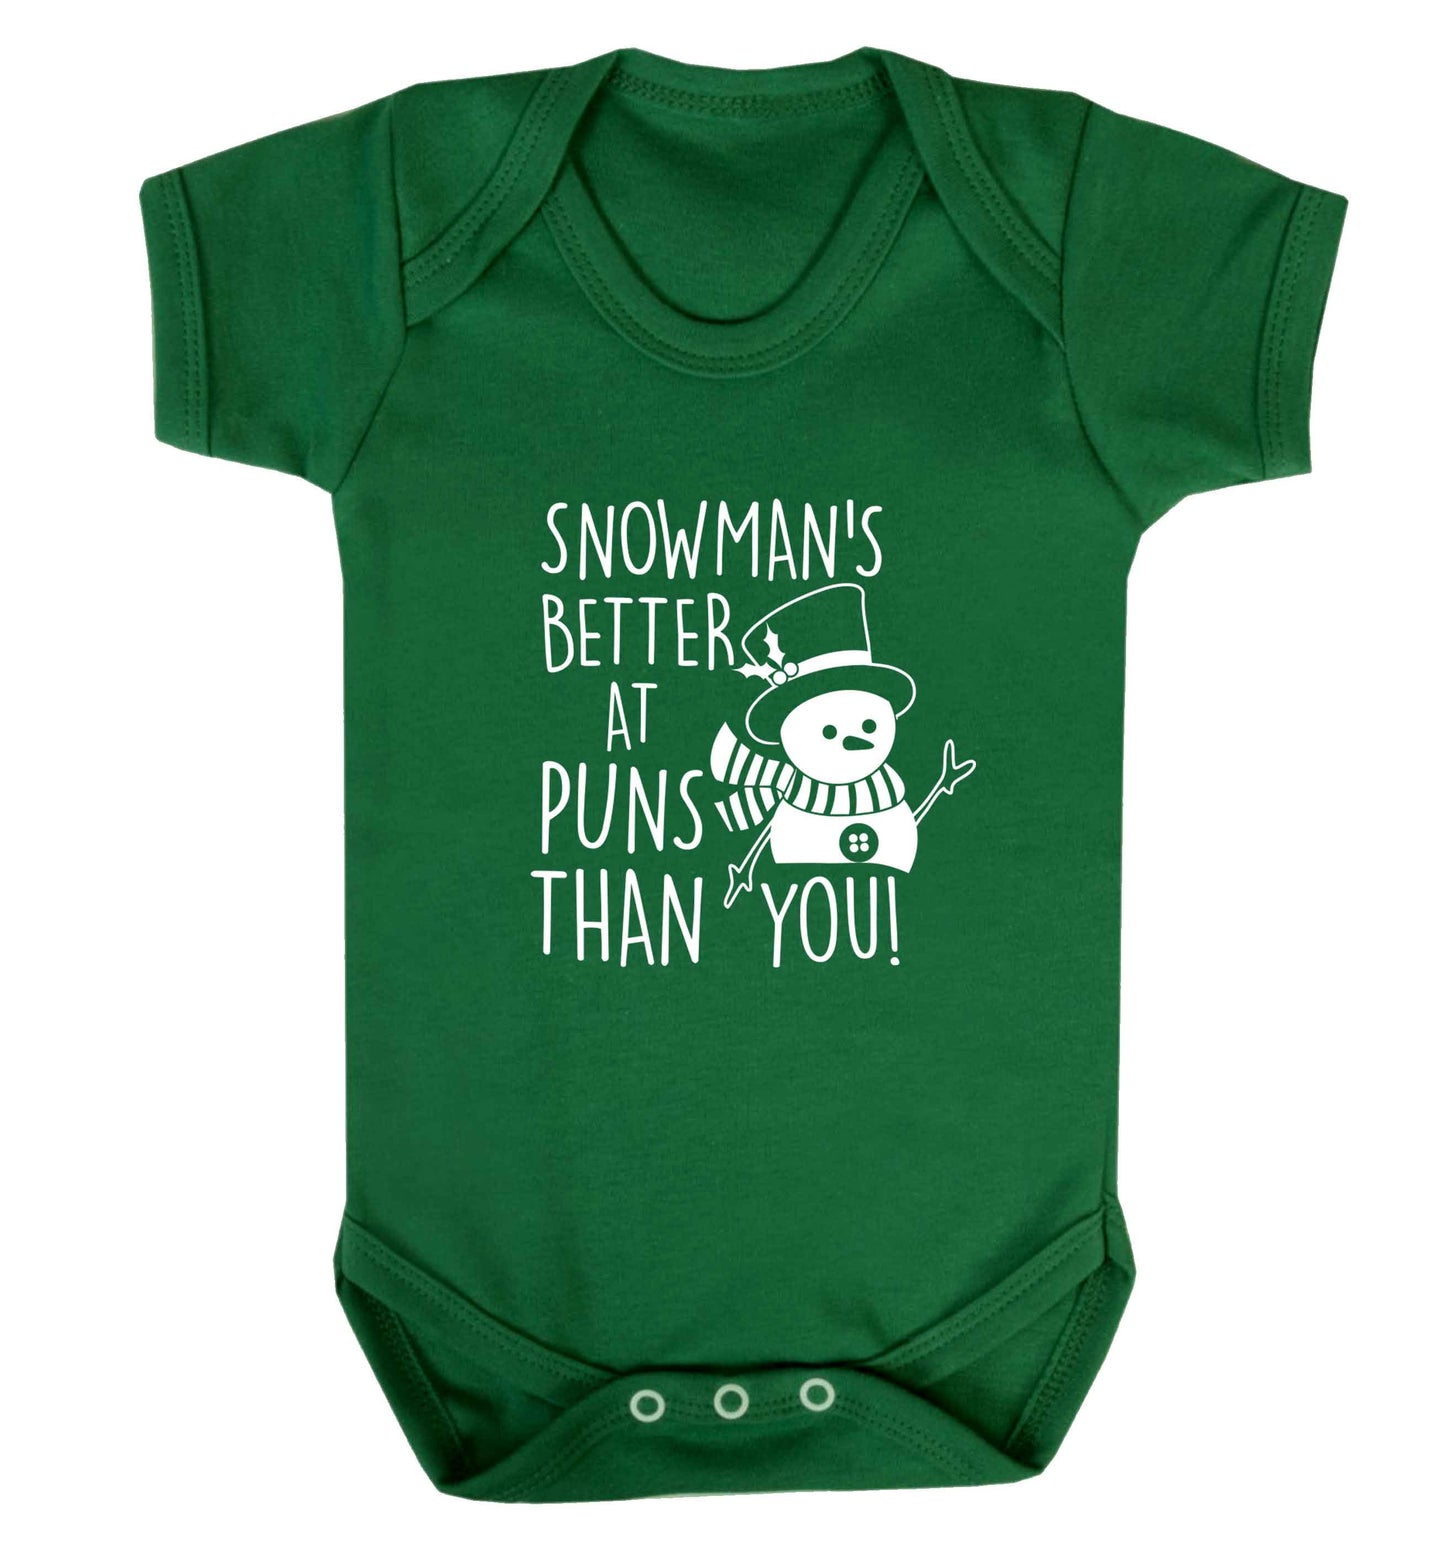 Snowman's Puns You baby vest green 18-24 months